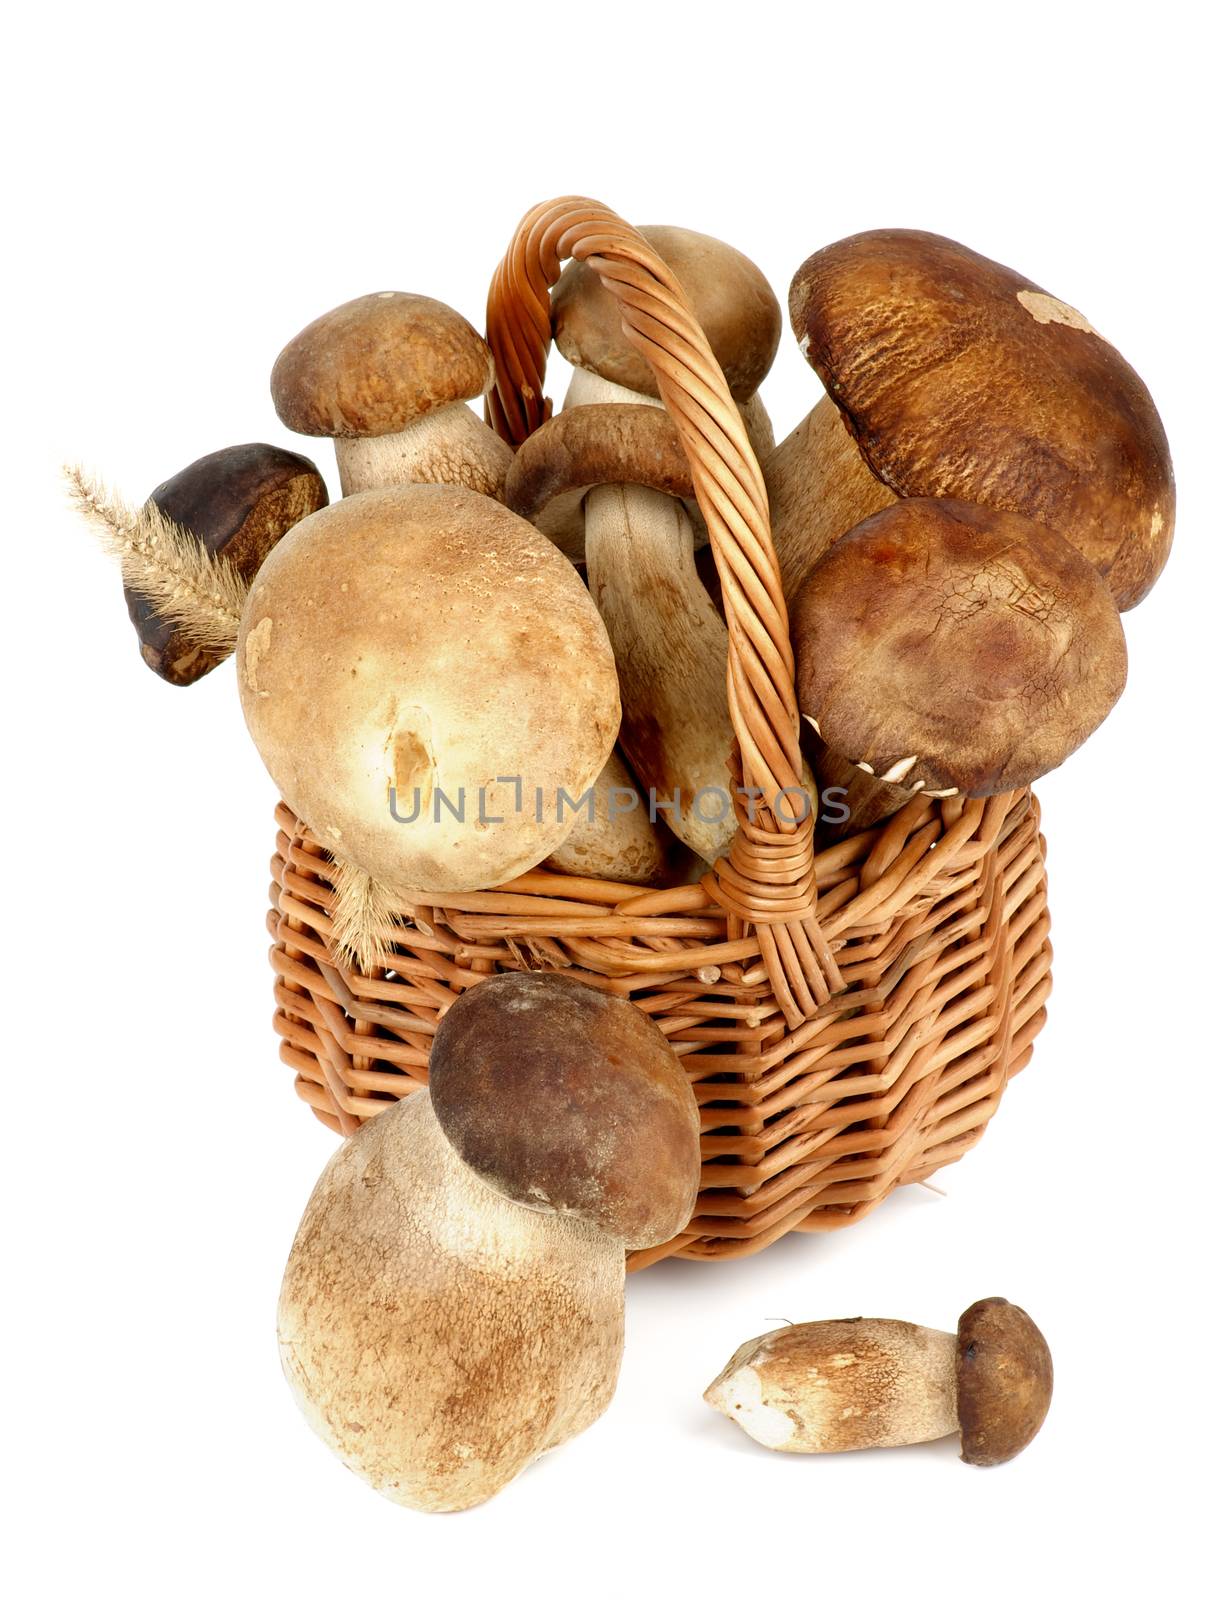 Fresh Raw Boletus Mushrooms in Wicker Basket isolated on White background